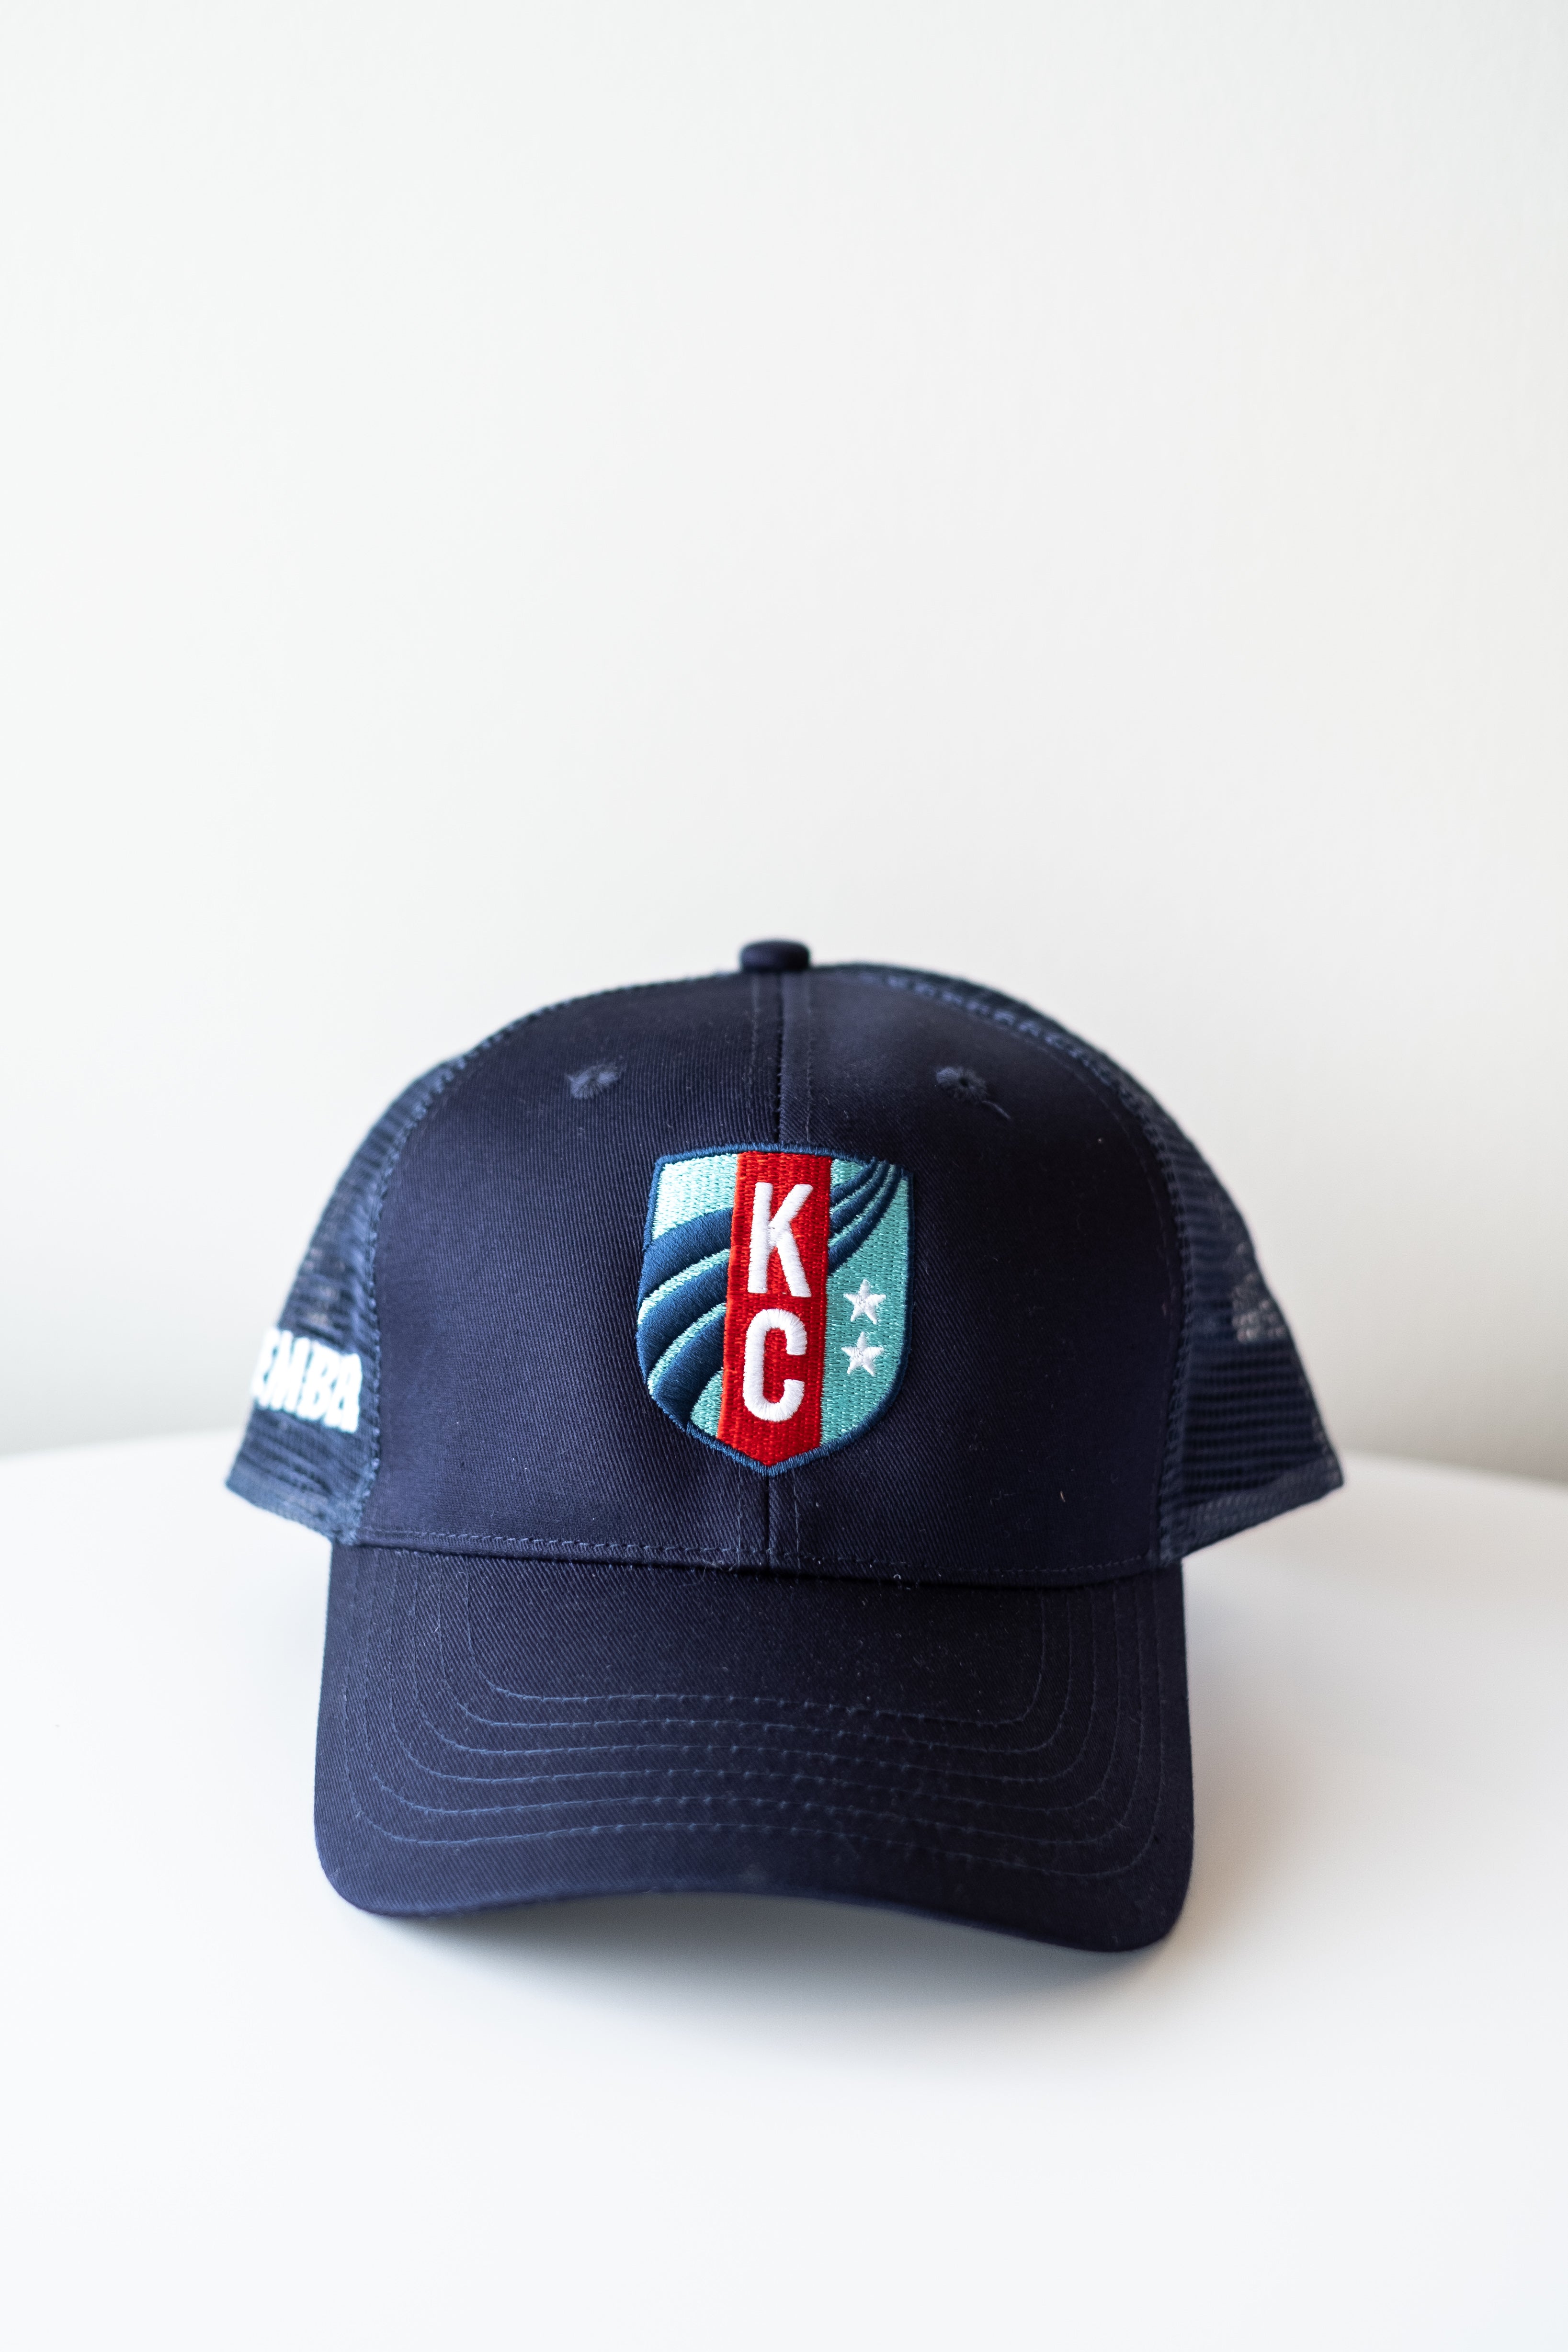 KC Current Unisex Navy Trucker Member Exclusive Hat – Kansas City ...